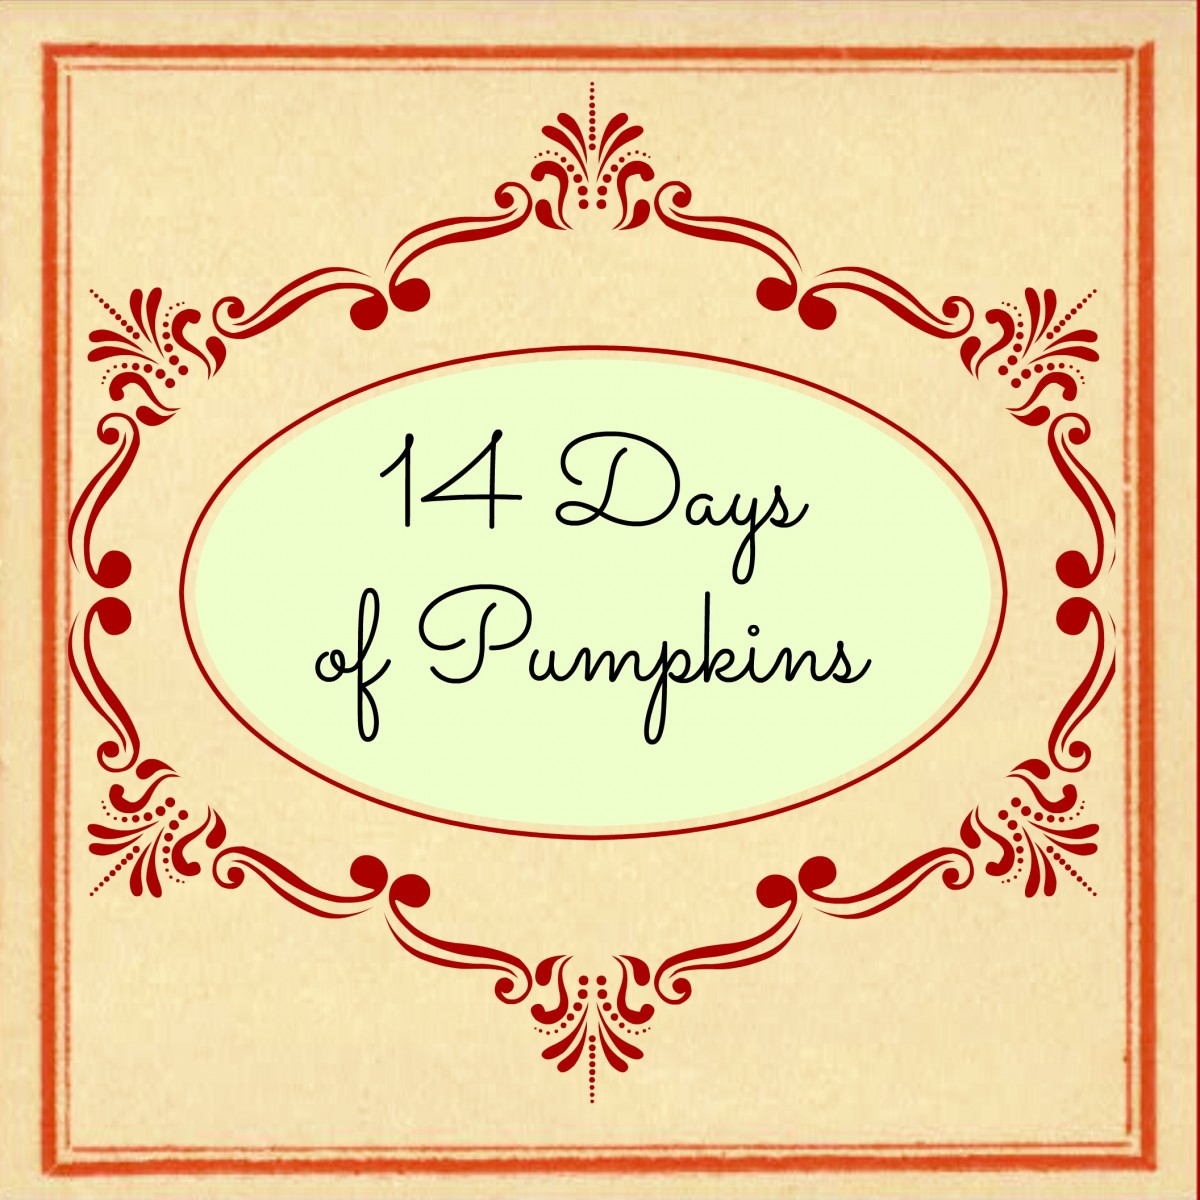 14 Days of Pumpkins www.joyinourhome.com